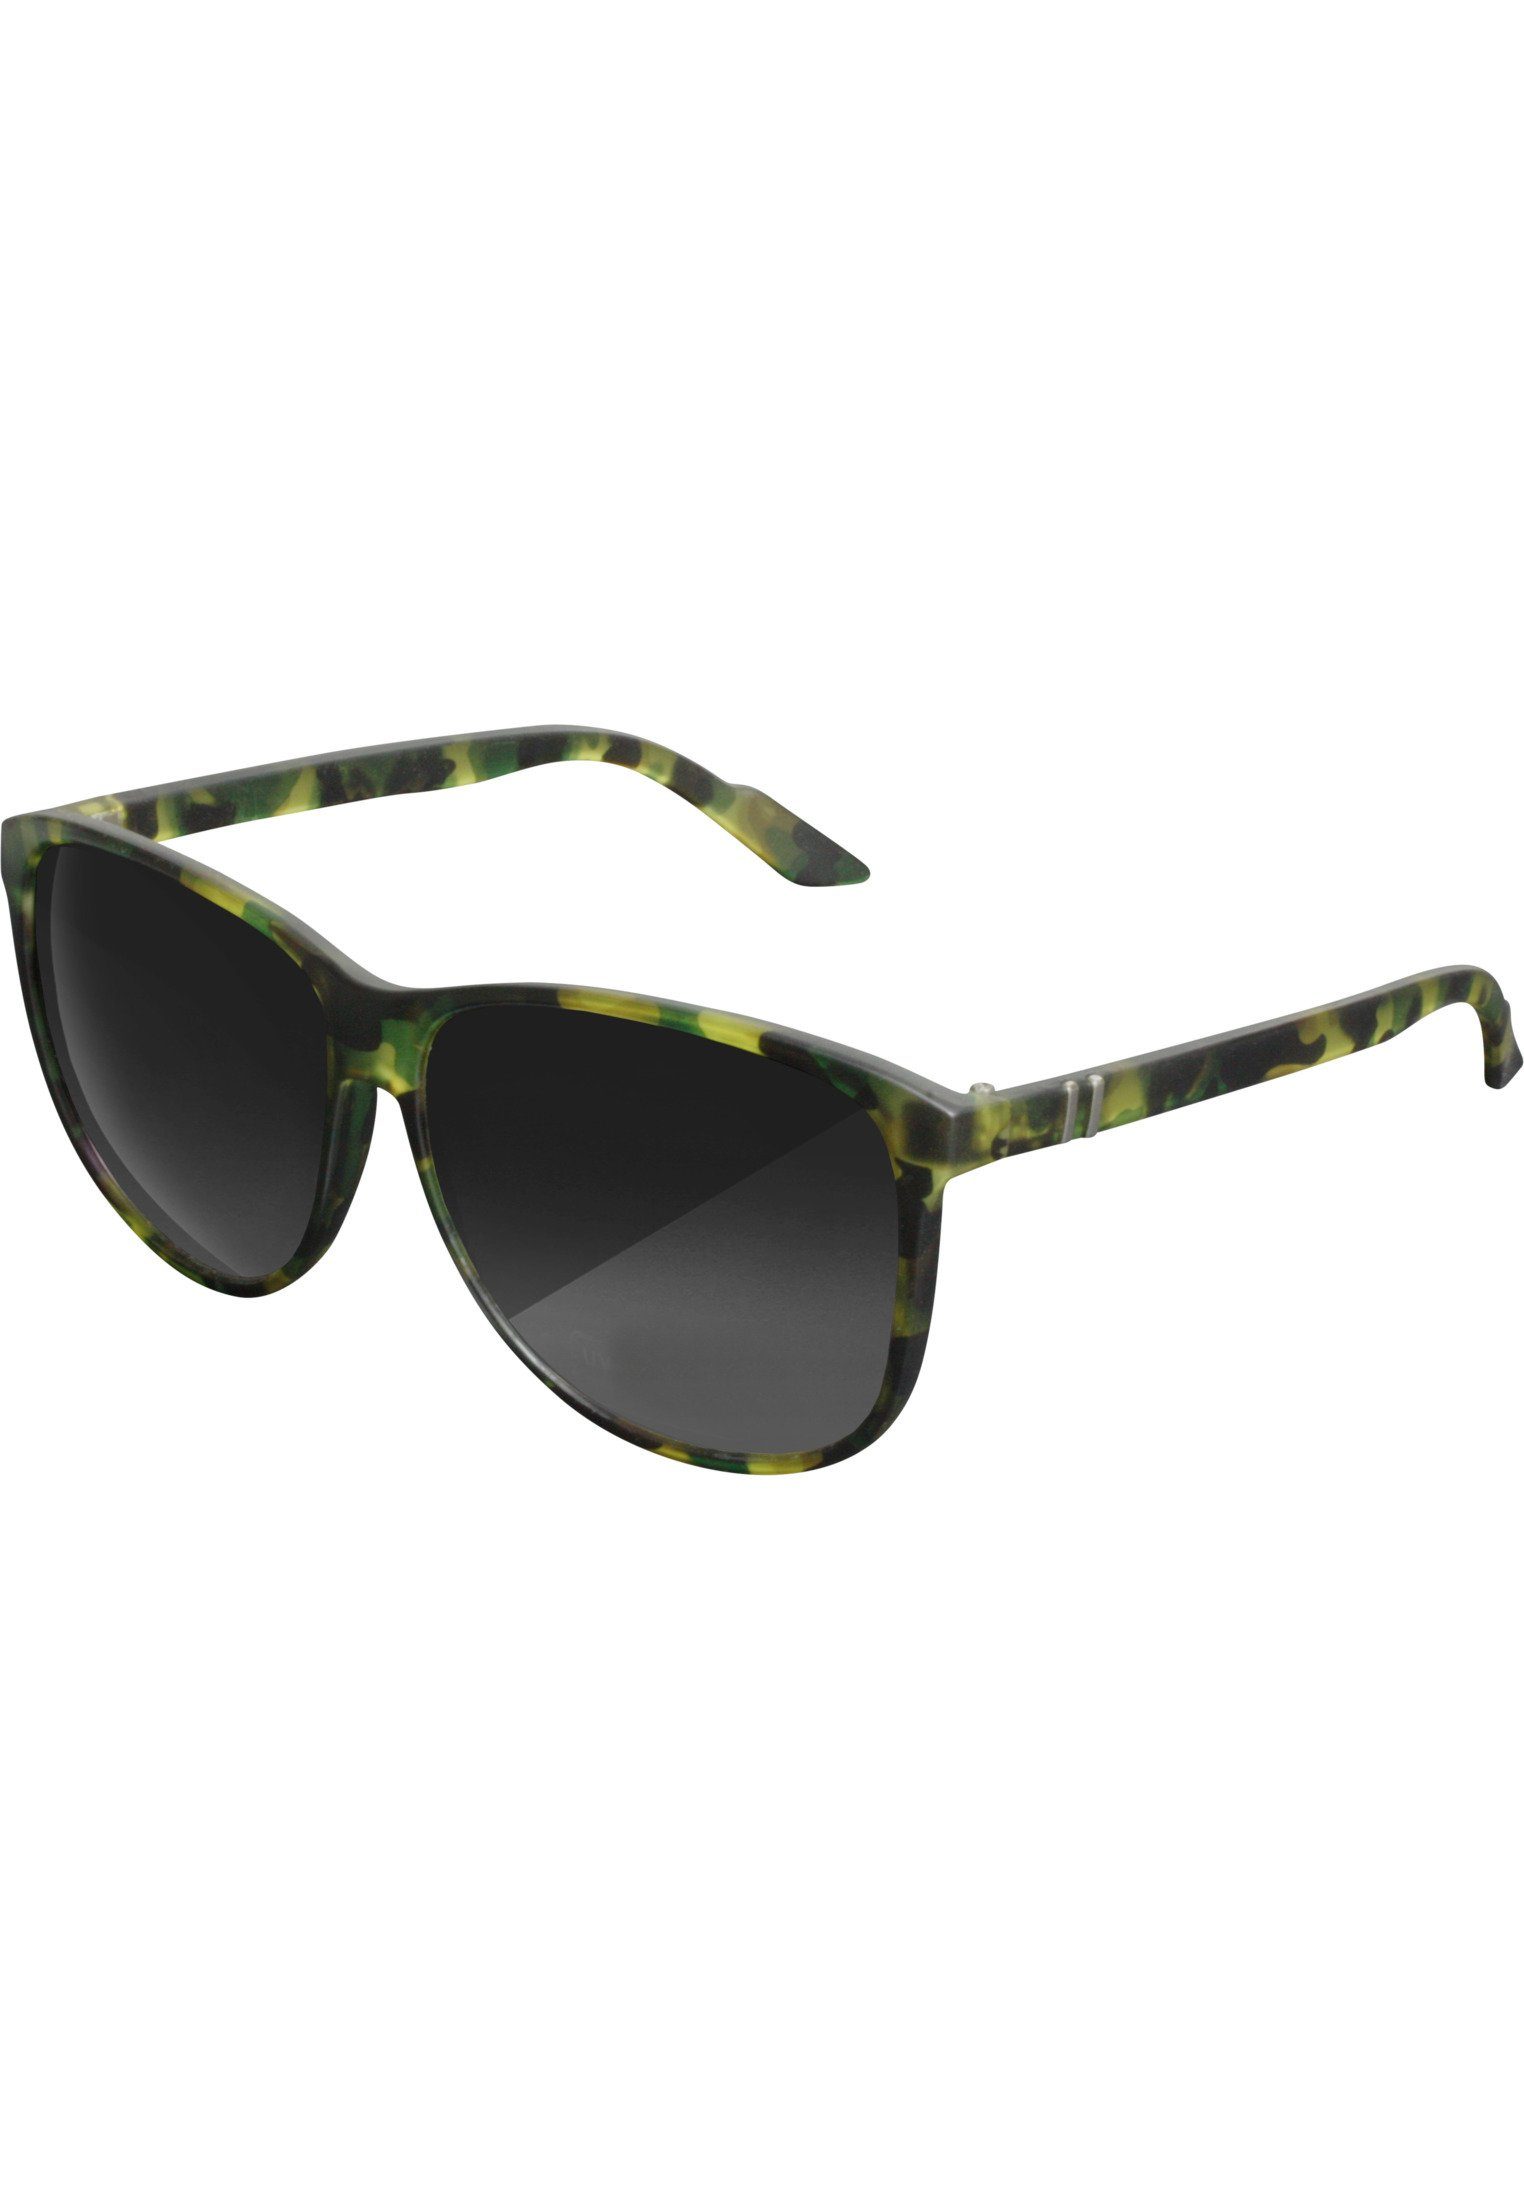 MSTRDS Sonnenbrille Accessoires Sunglasses Chirwa camo | Sonnenbrillen